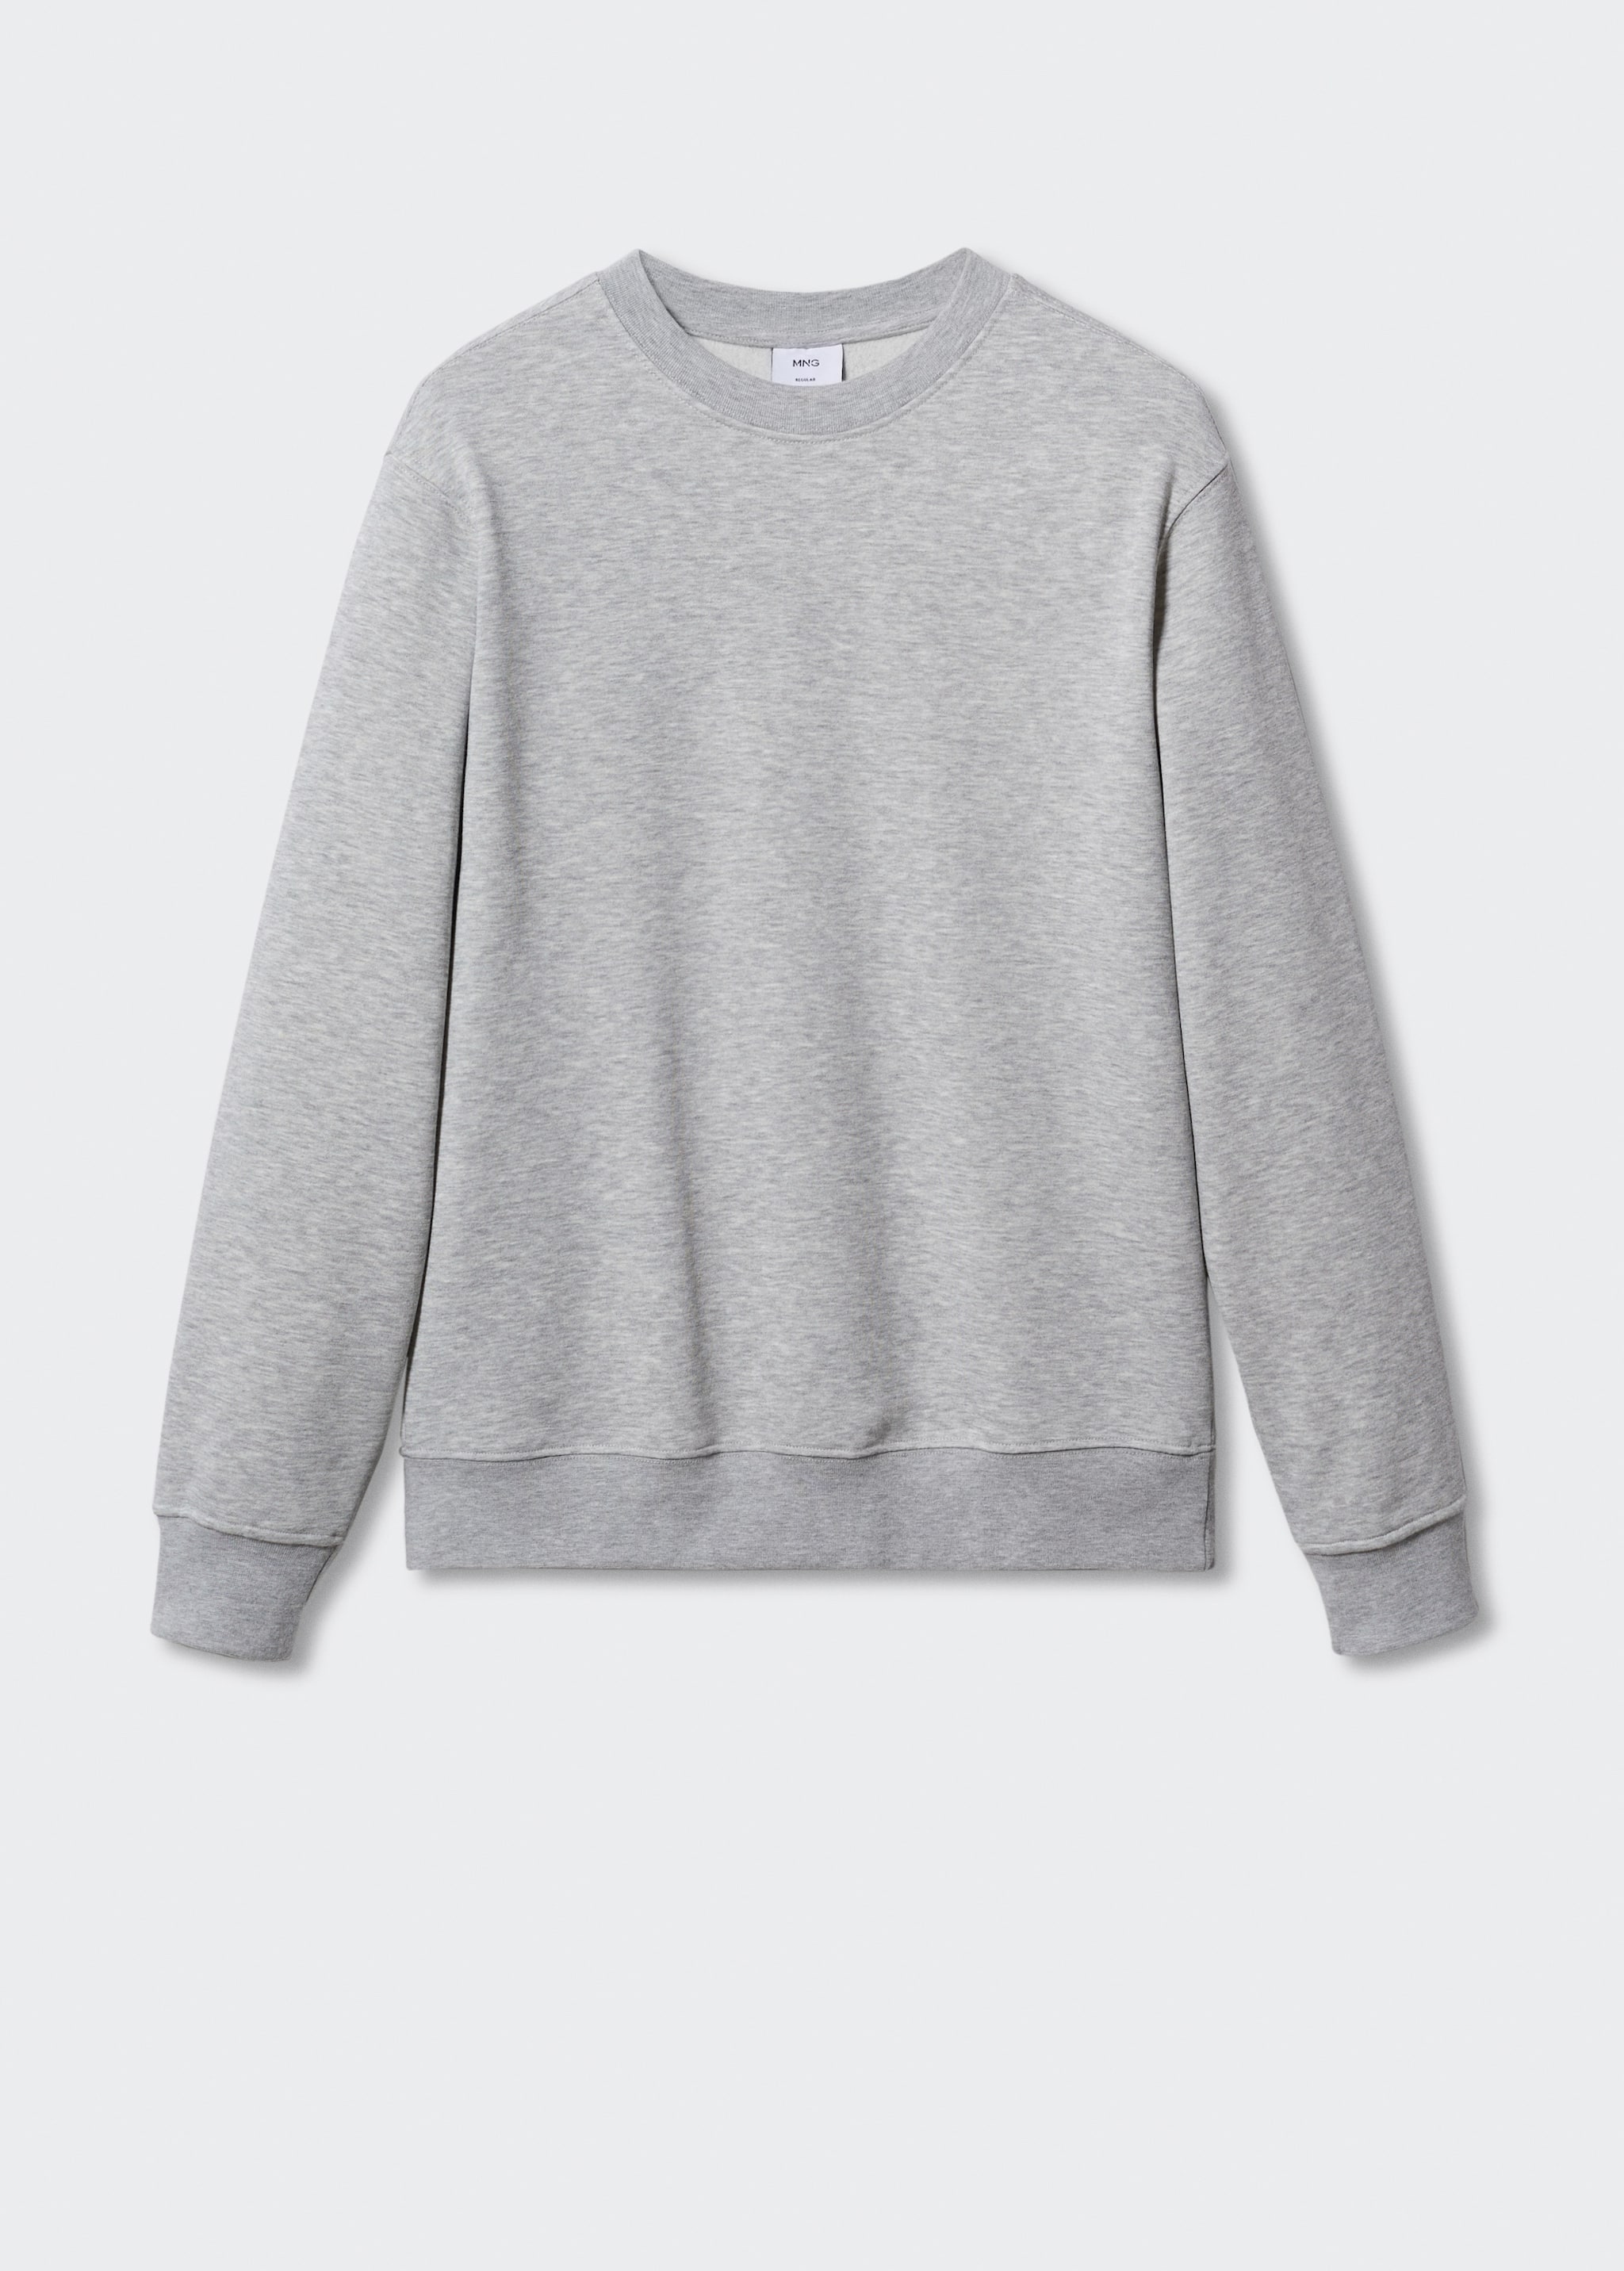 Plush cotton sweatshirt - Article without model